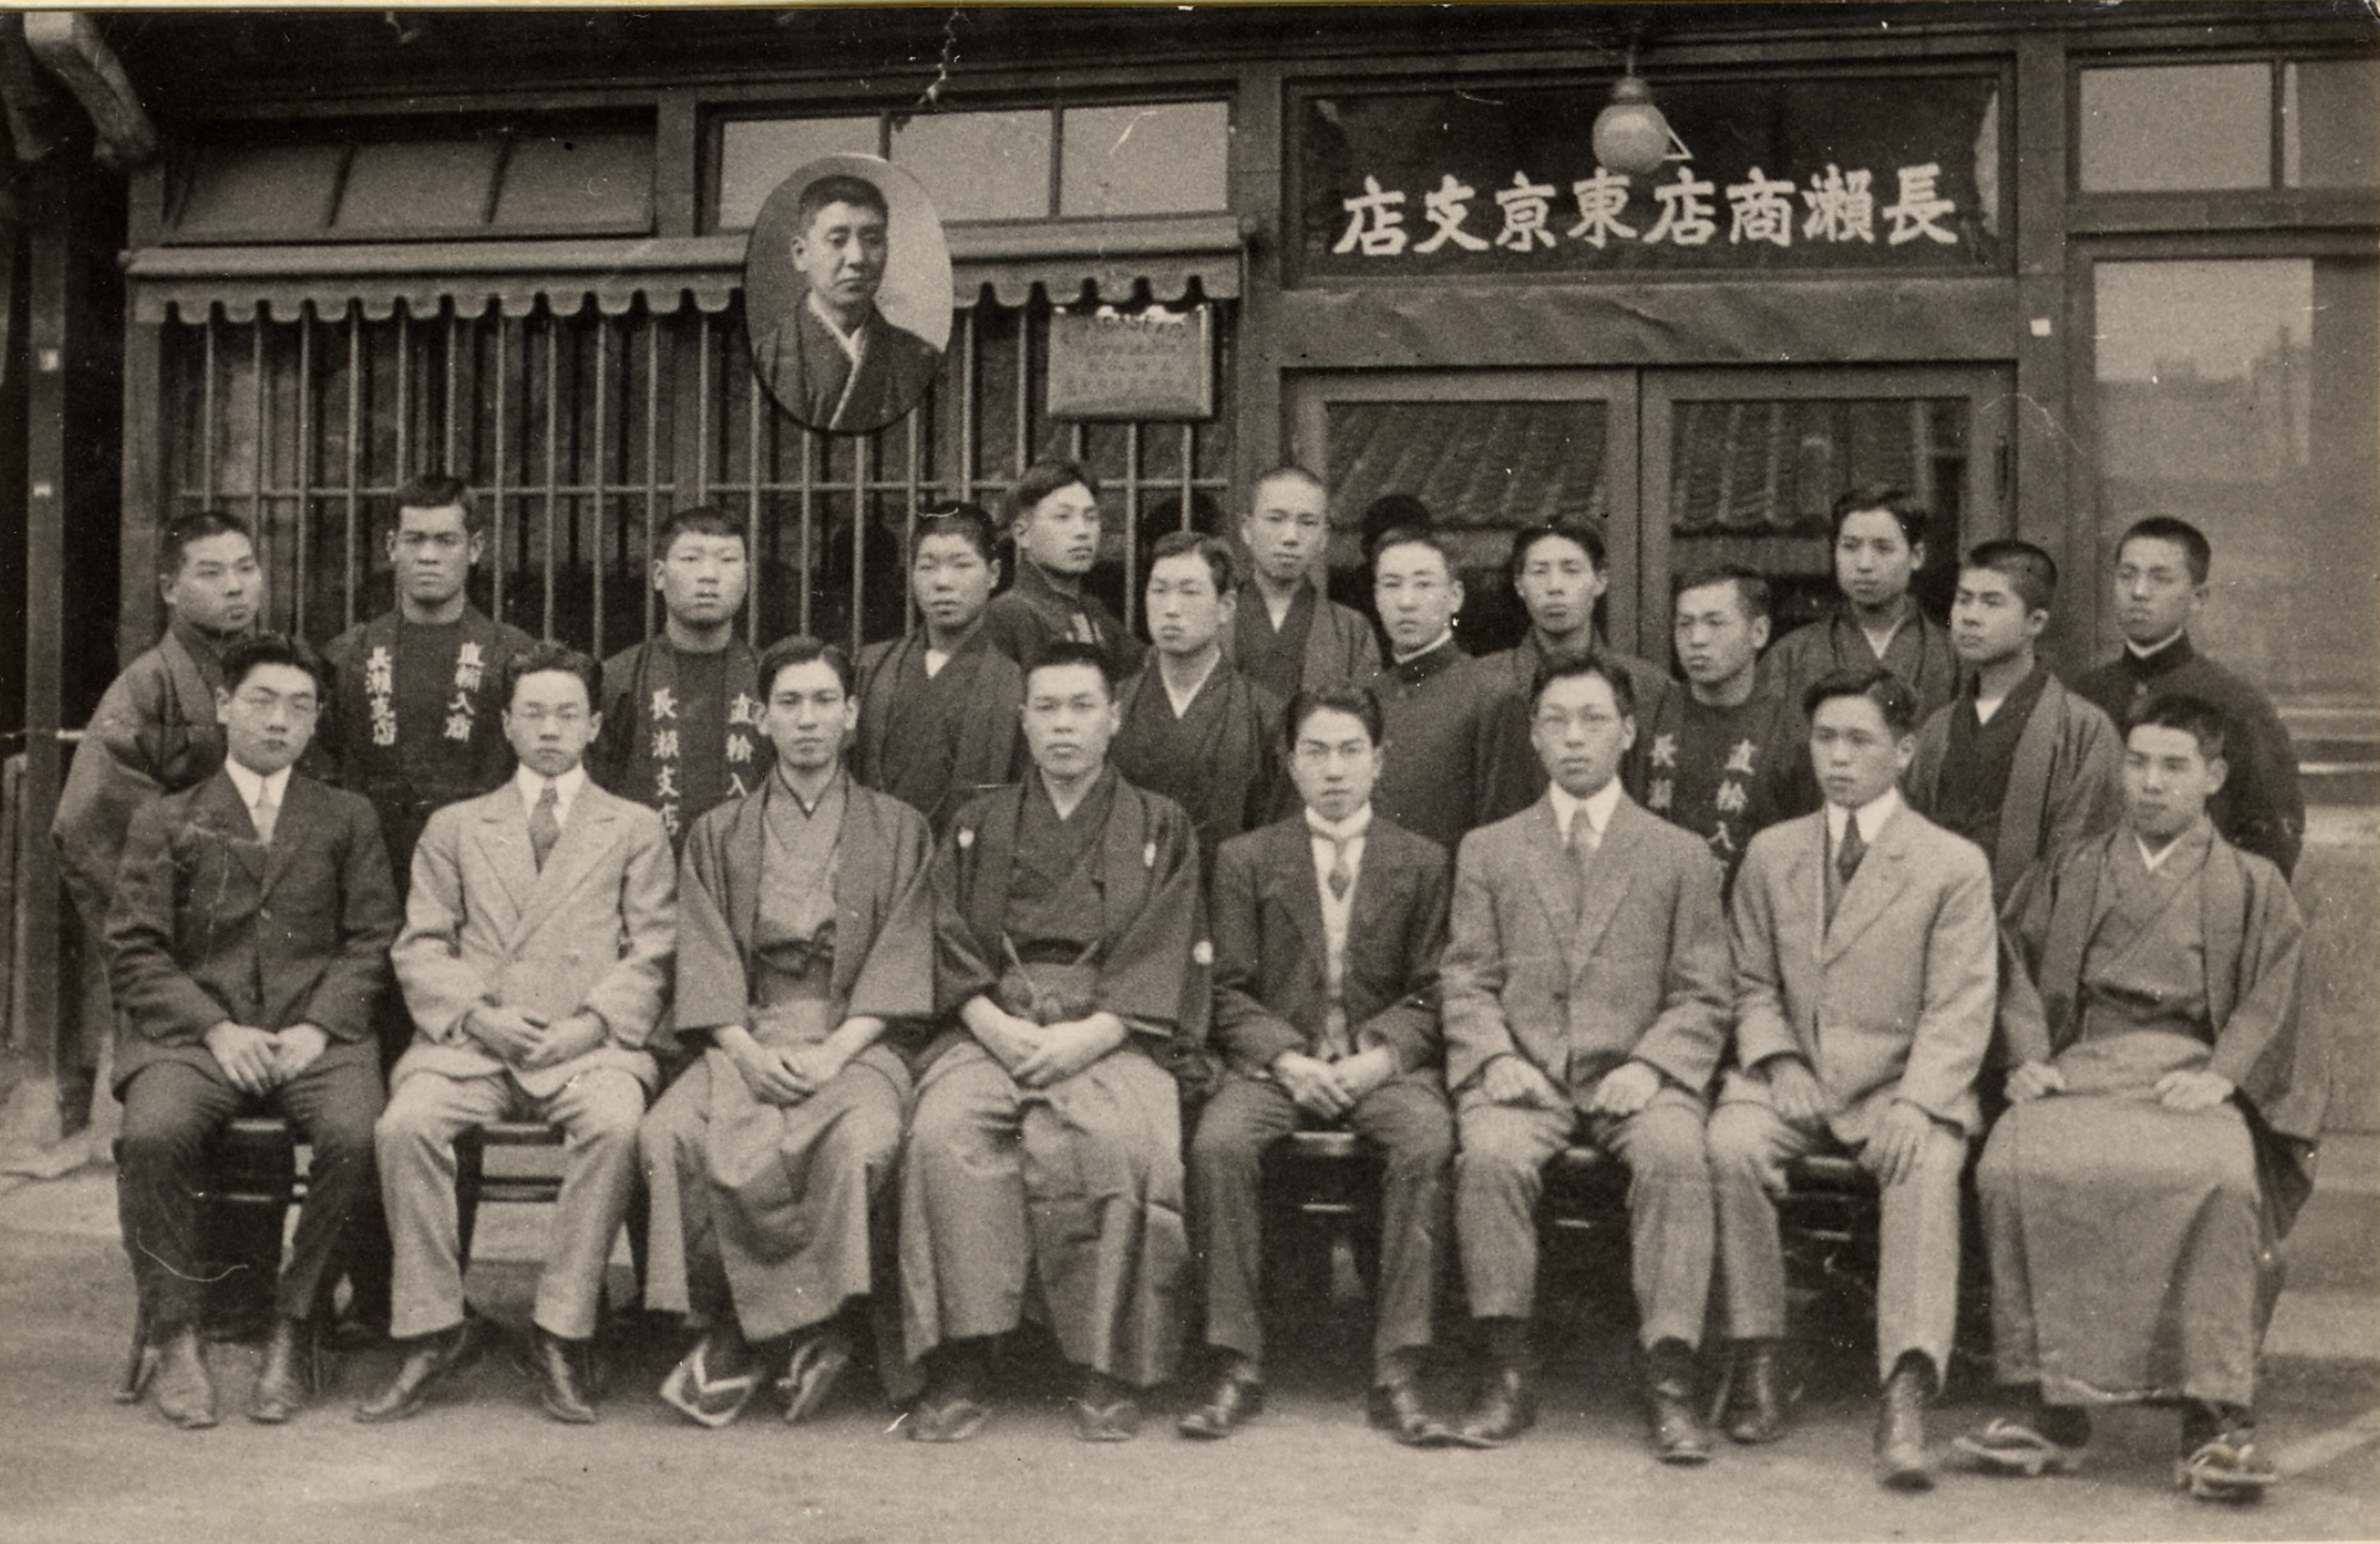 Tokyo branch office in 1913